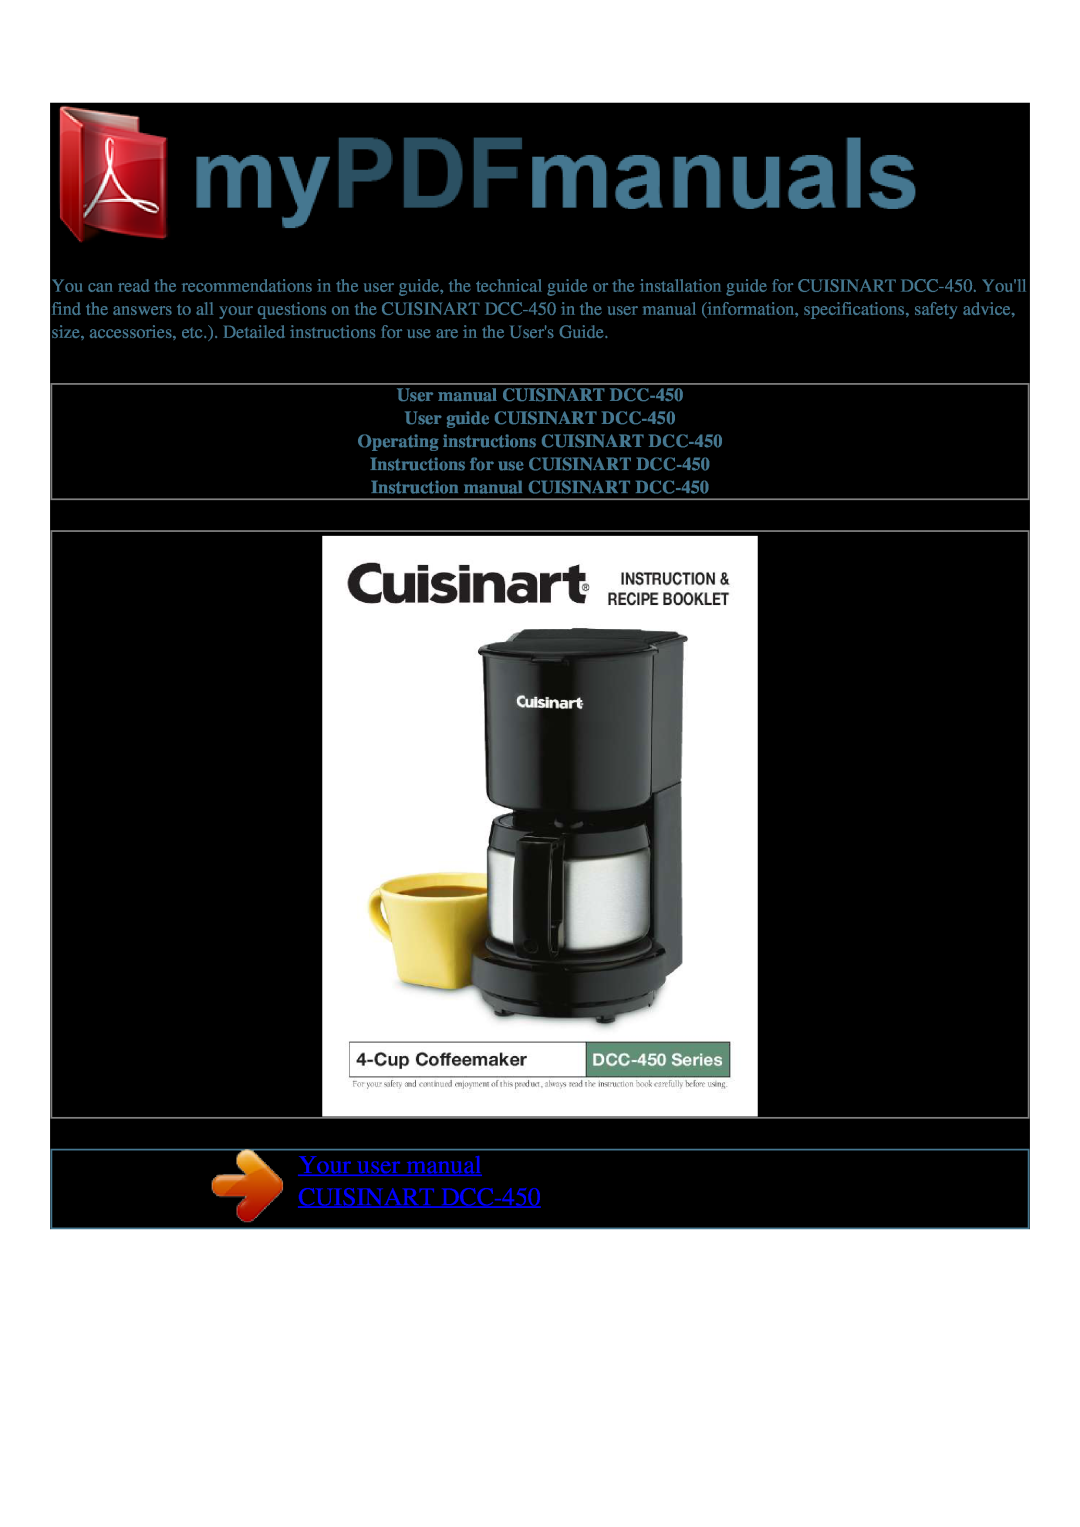 Cuisinart DCC-450BK manual Instruction & Recipe Booklet, Cup Coffeemaker, DCC-450 Series 